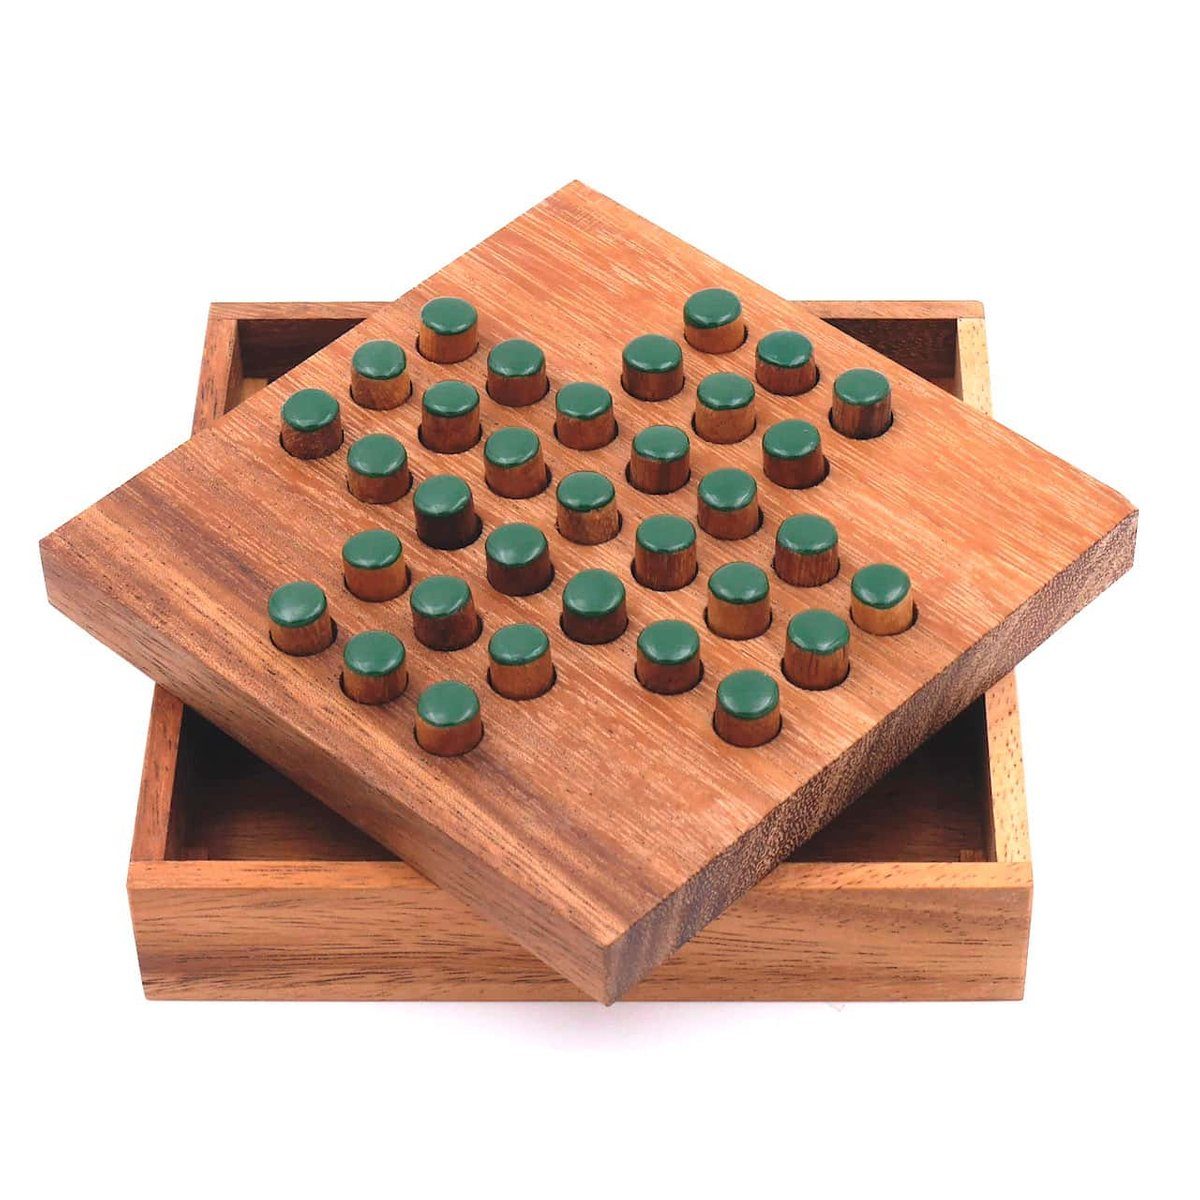 Denkspiele aus Solitaire edlem Steckspiel Spiel, grün ROMBOL Holzspiel Holz, unterhaltsamer - Klassiker